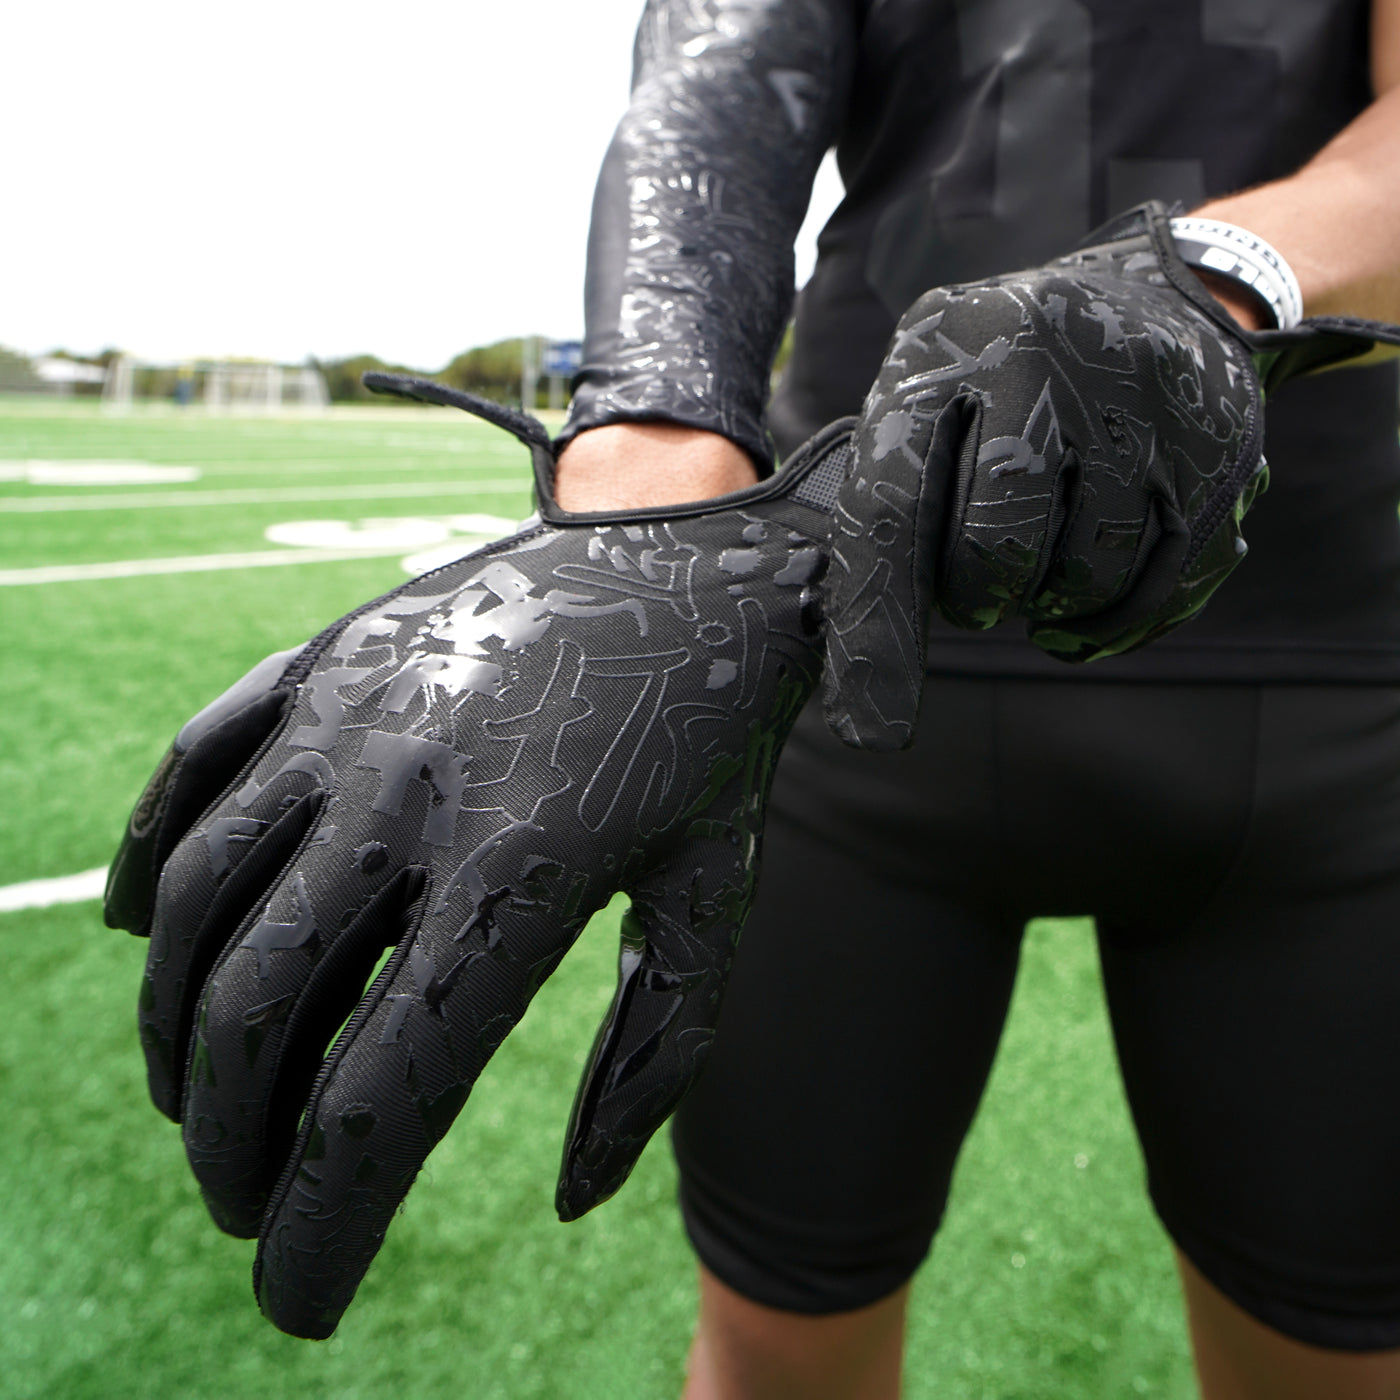 SLF Pattern Black Gold Sticky Football Receiver Gloves